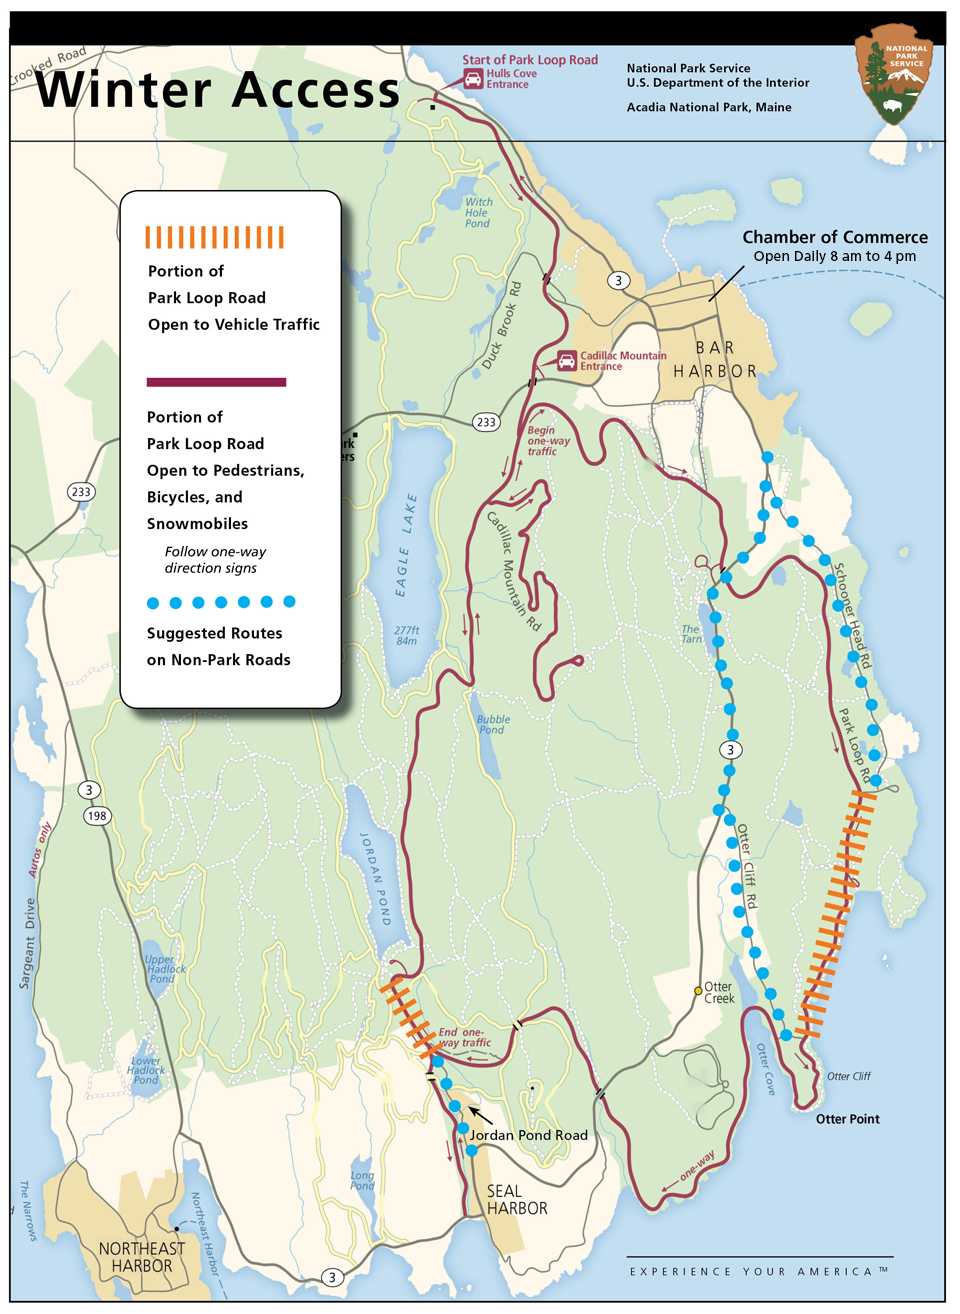 acadia national park maine map Maps Acadia National Park U S National Park Service acadia national park maine map